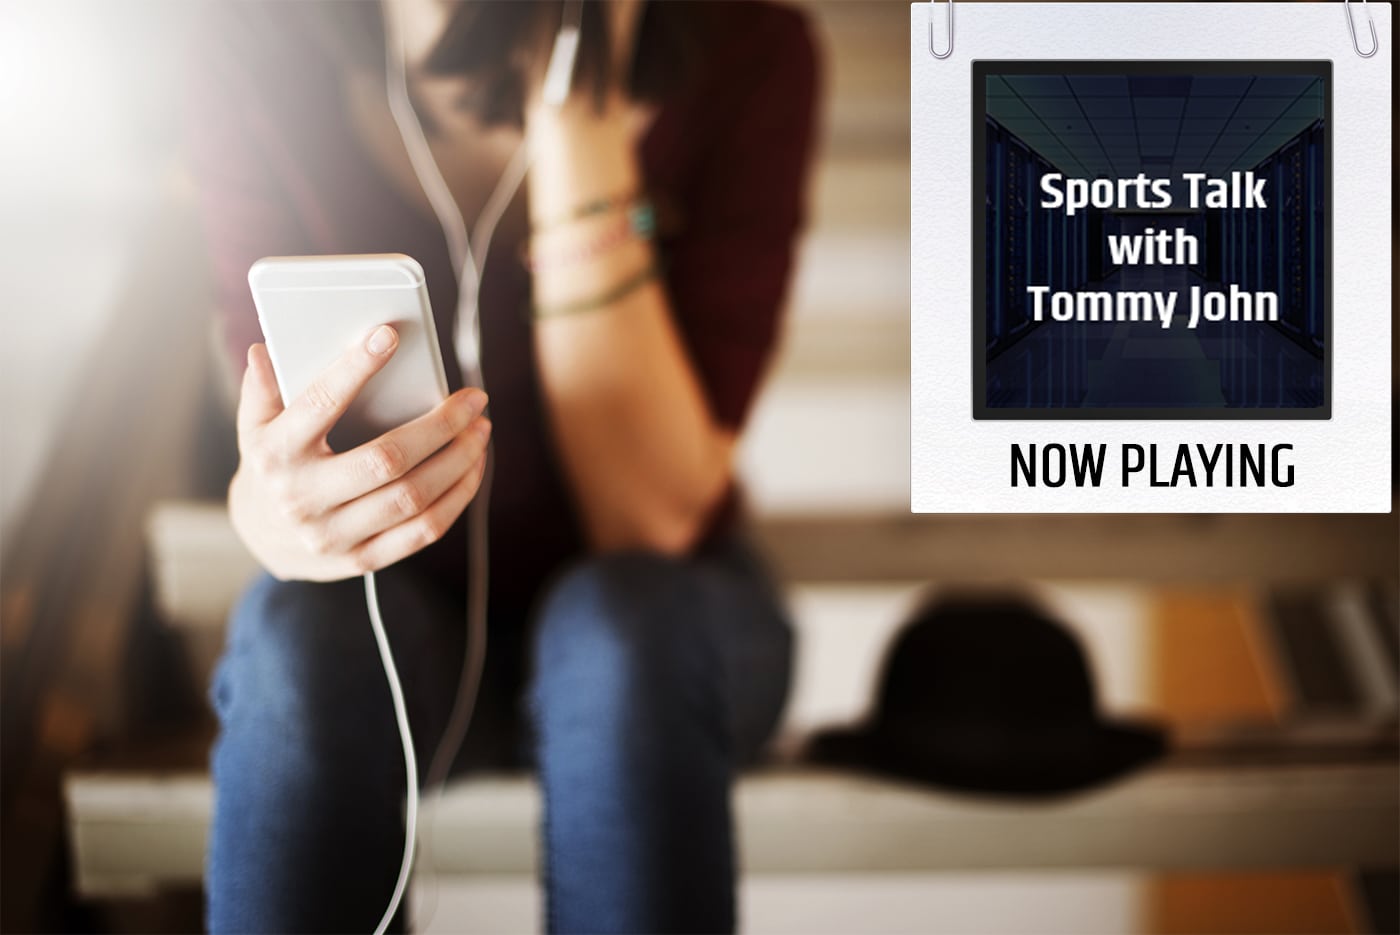 "sports talk with tommy john"